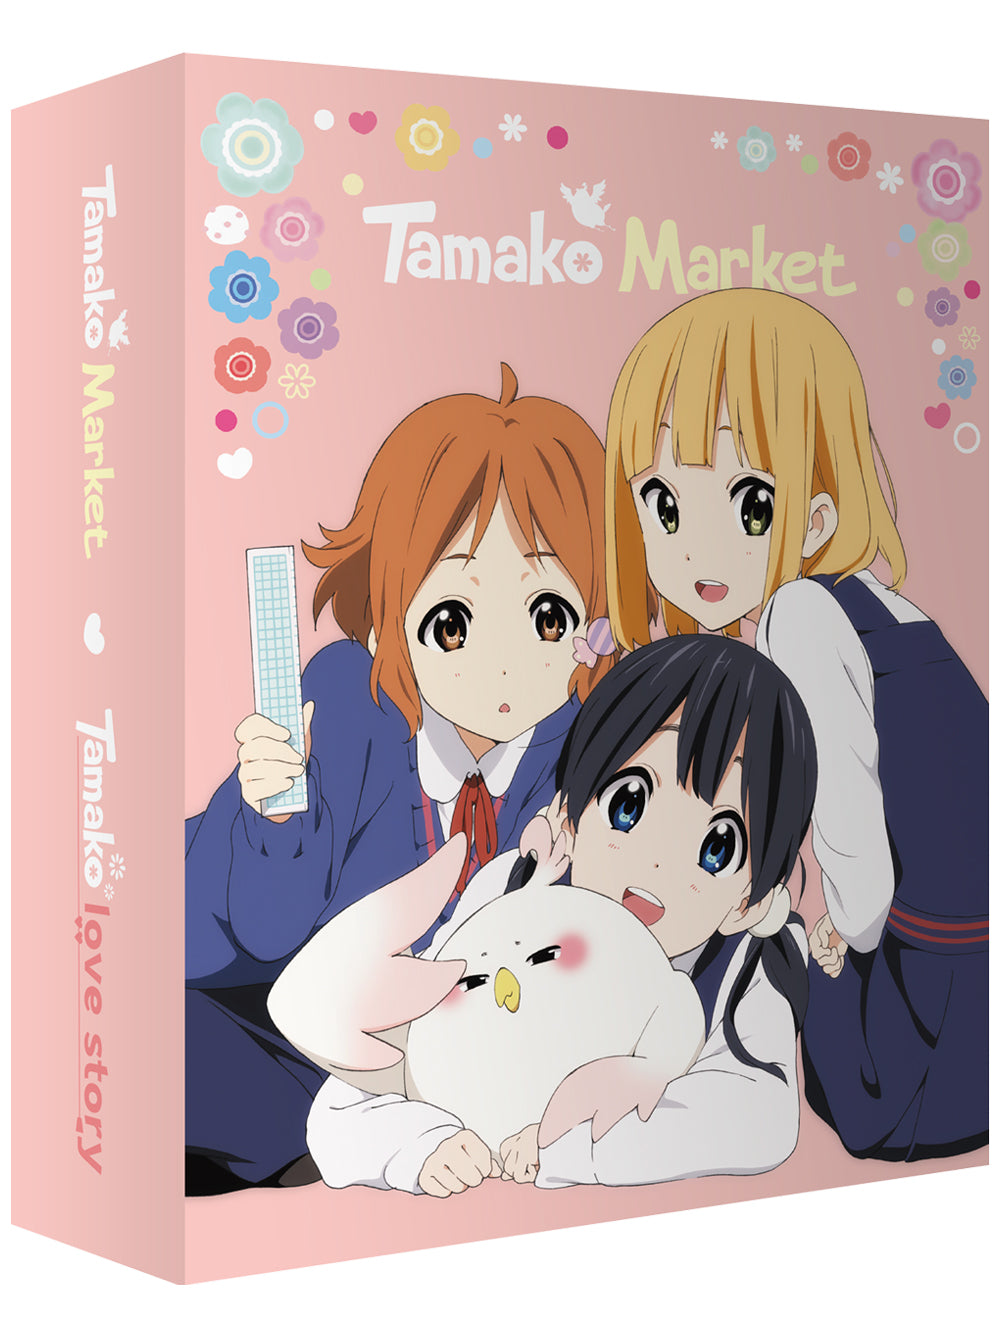 Tamako Market A Sub Gallery By: RyuZU²